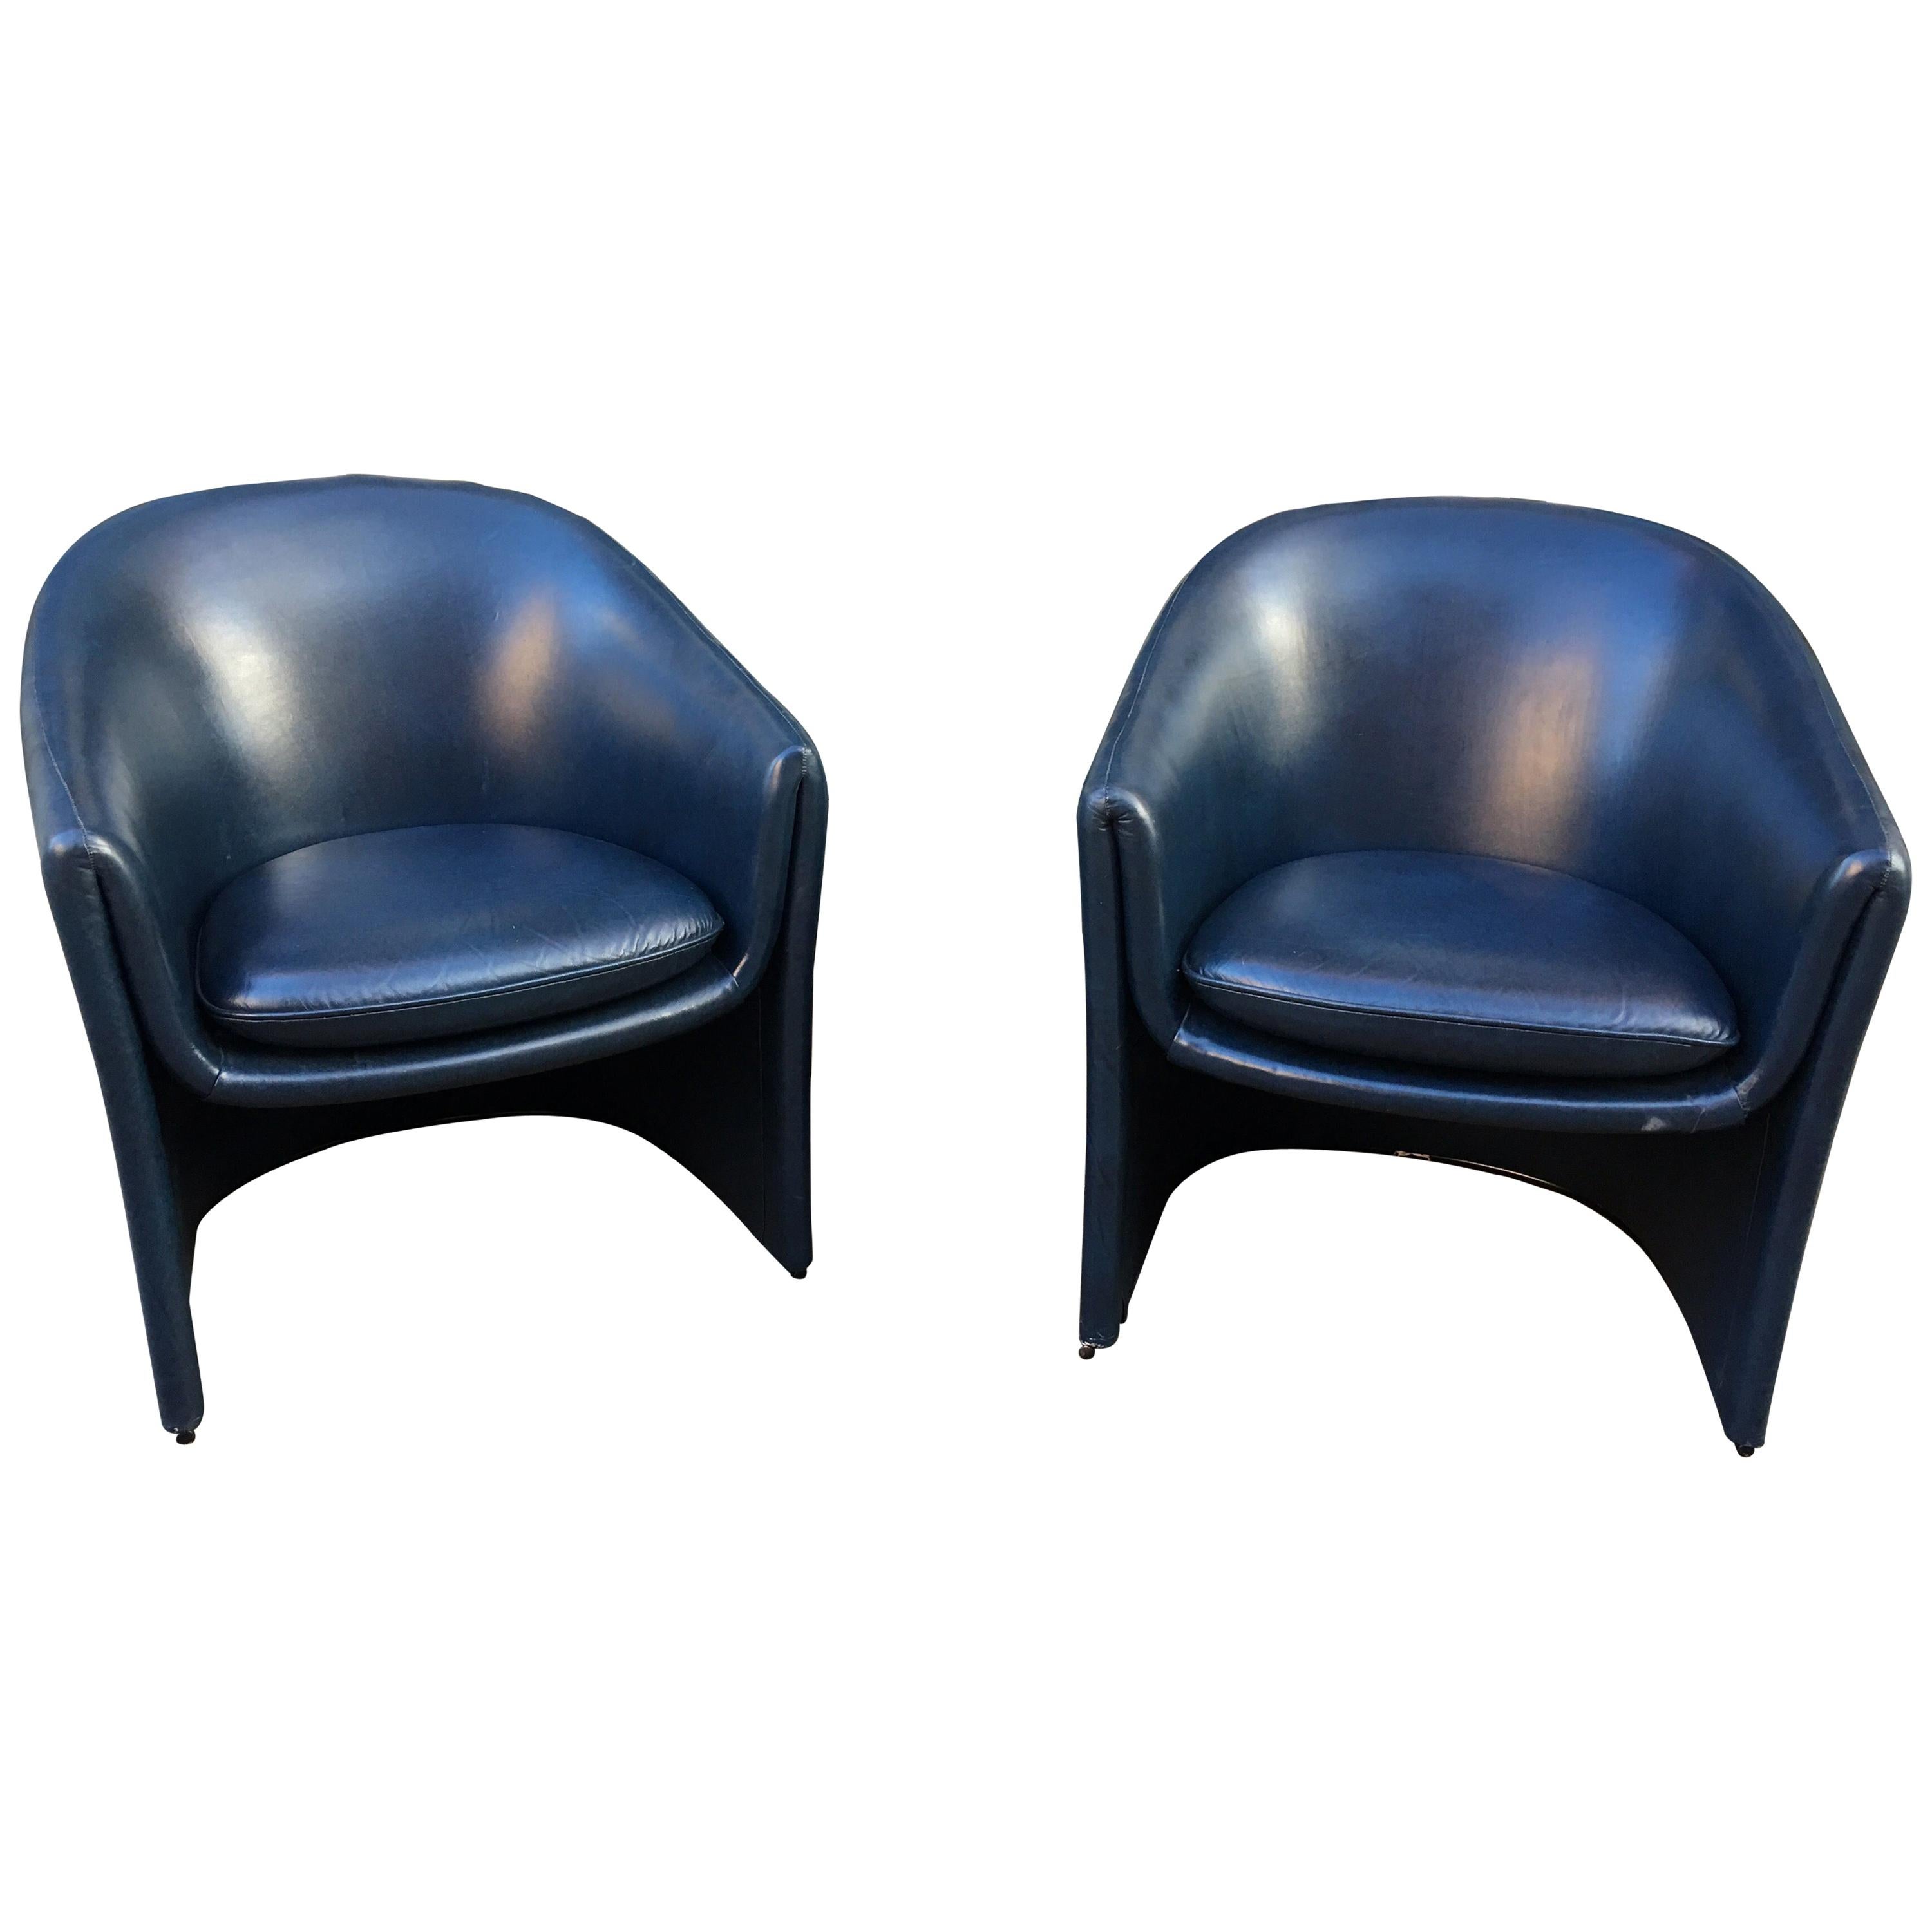 Pair of Dunbar Chairs in Dark Blue Vinyl